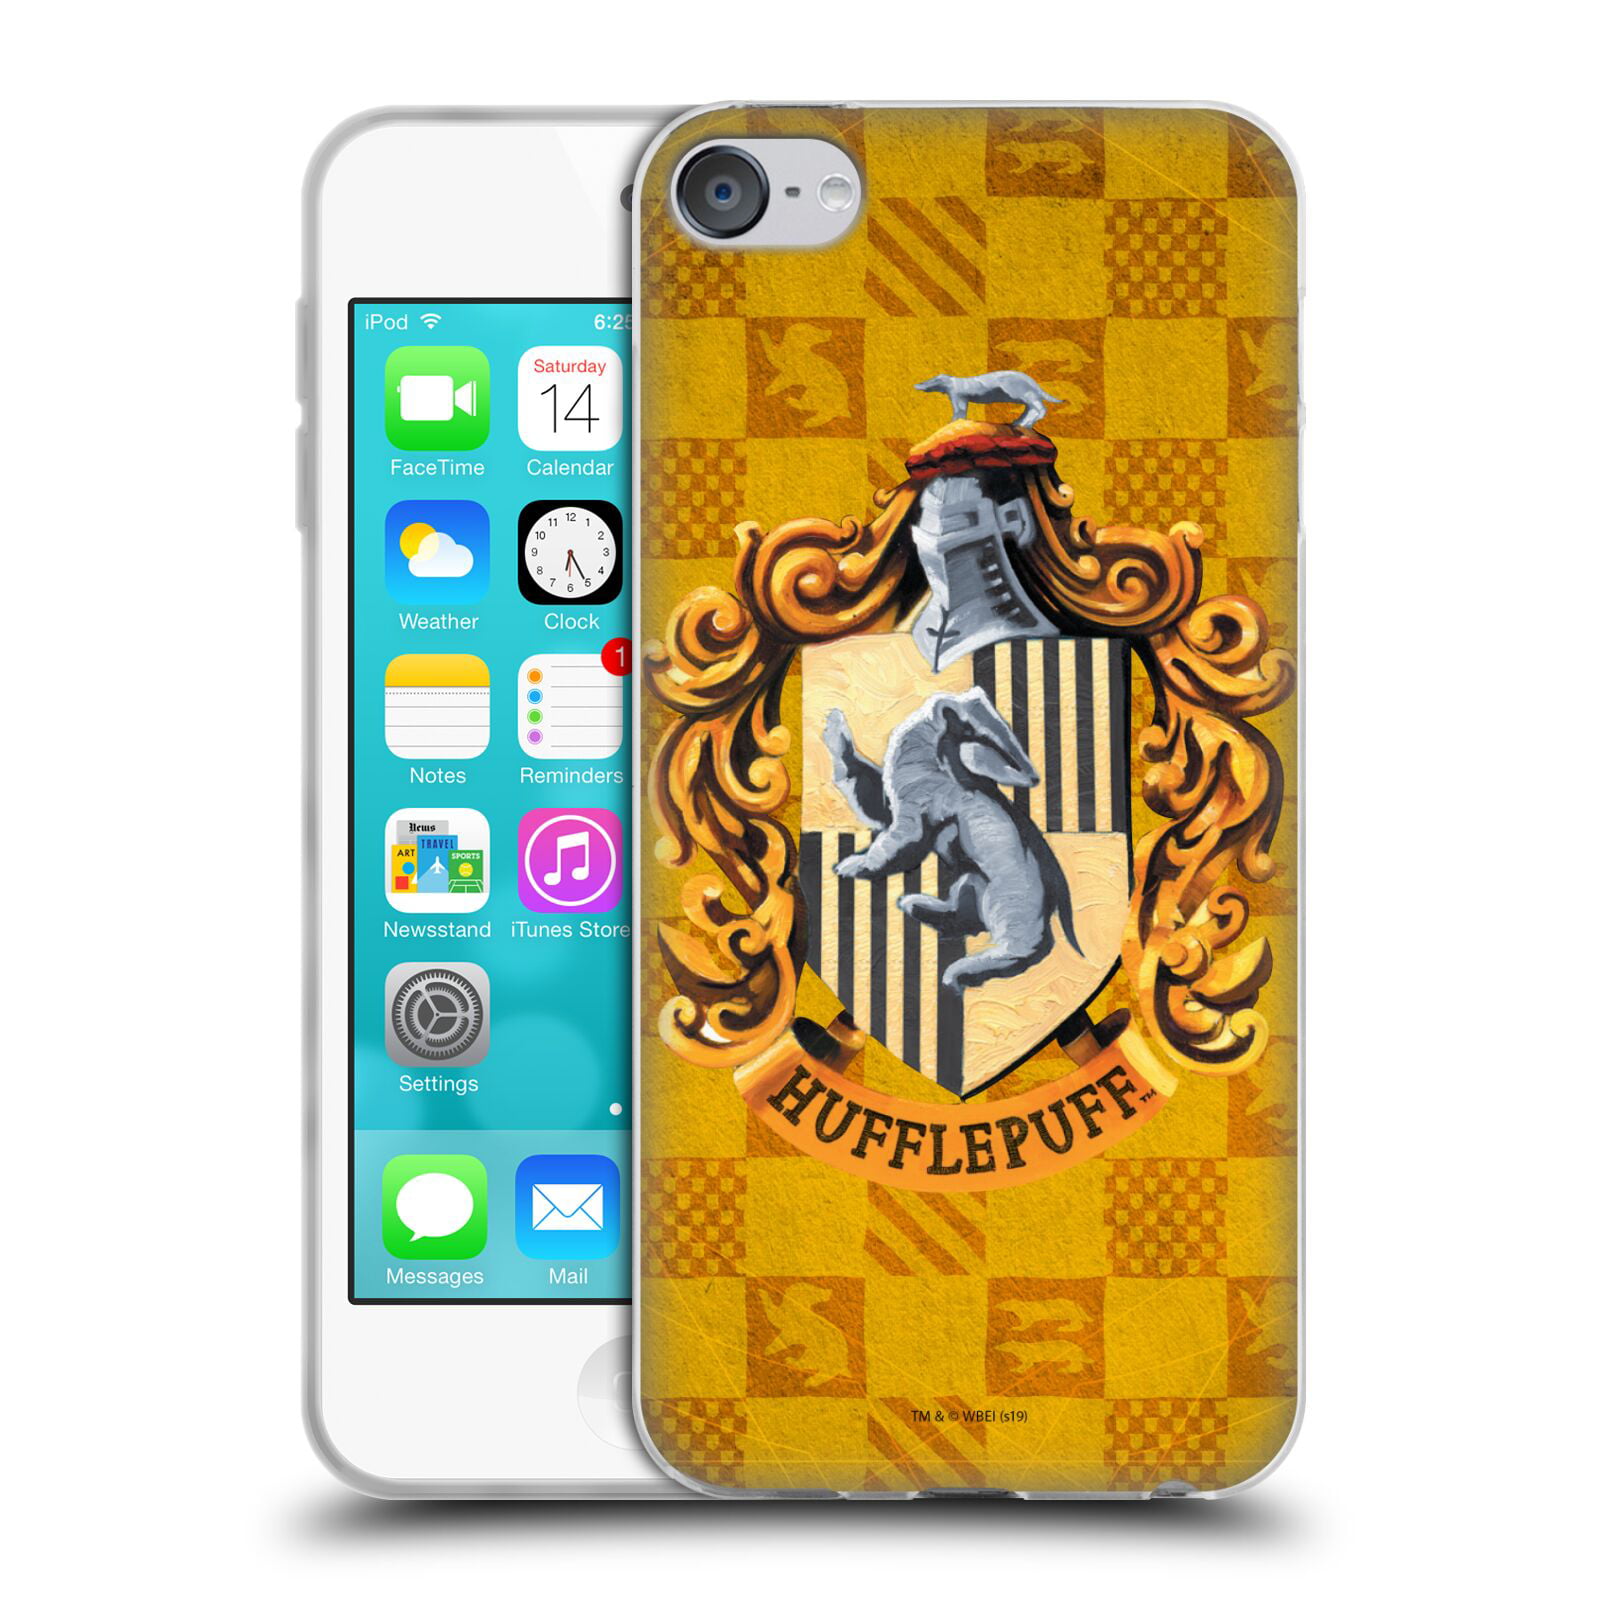 Head Case Designs Officiel Harry Potter Quidditch Broom Deathly Hallows I Coque en Gel Doux Compatible avec Apple iPod Touch 5G 5th Gen 